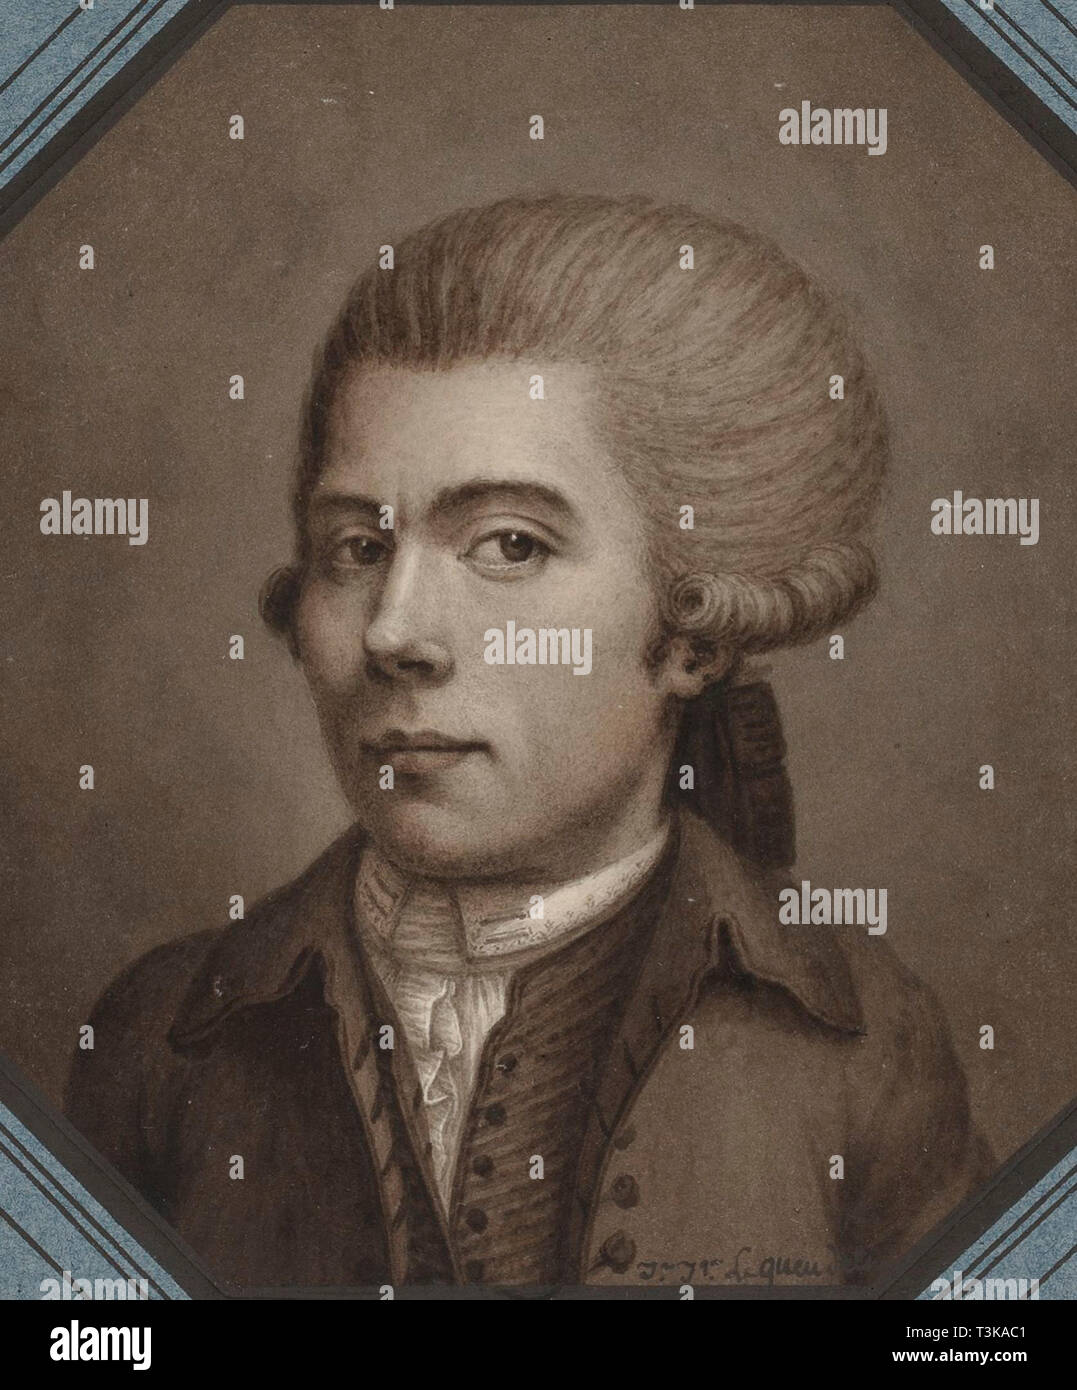 Jean jacques 1757 1826 fotografías e imágenes de alta resolución - Alamy